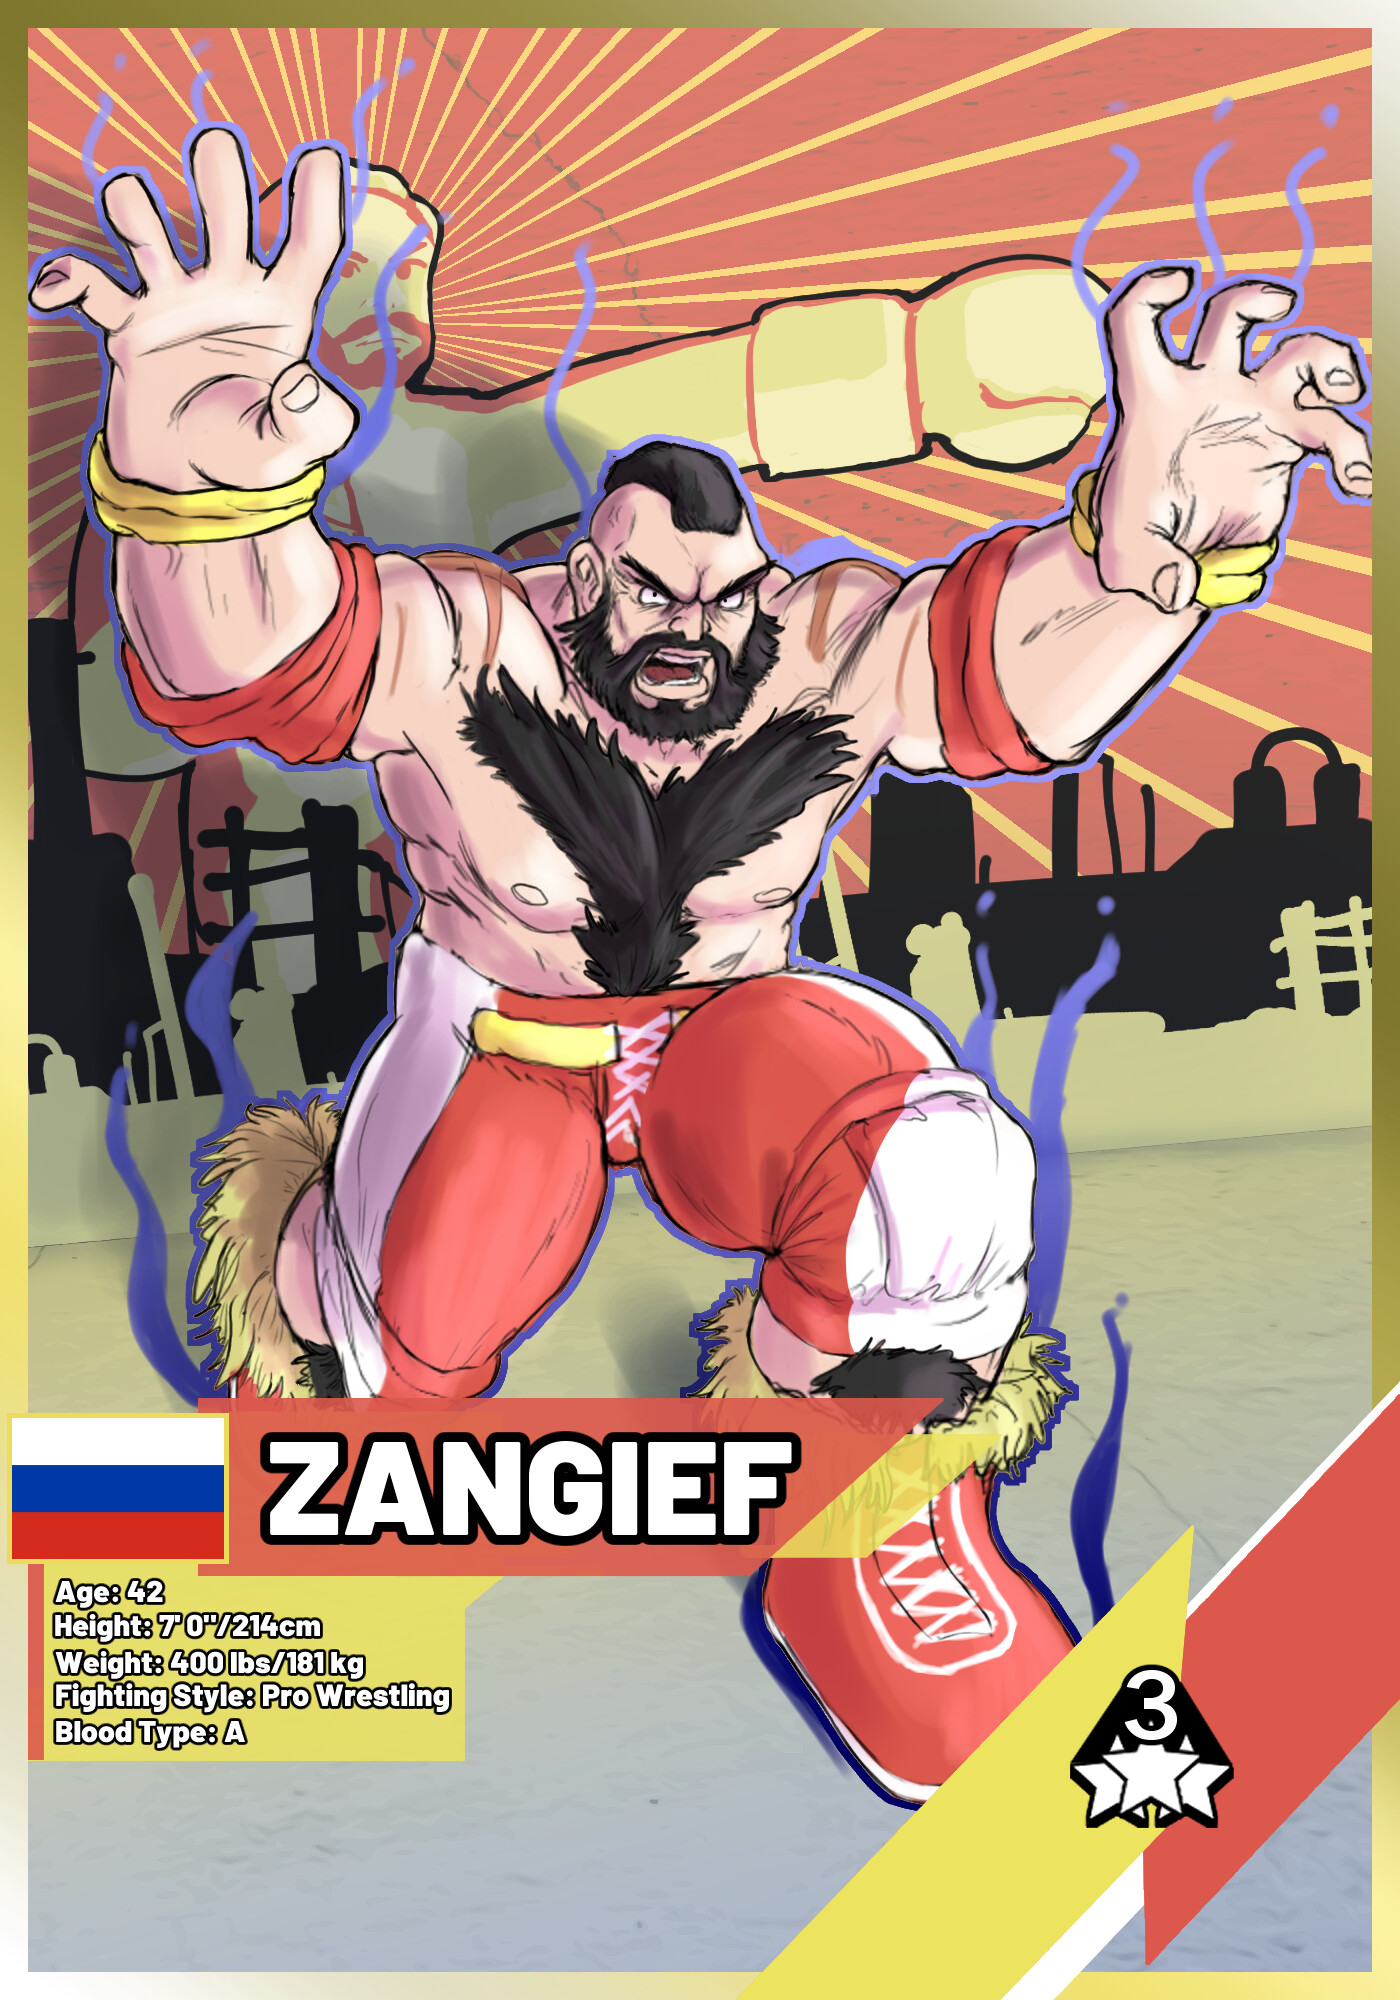 ZANGIEF, STREET FIGHTER 6